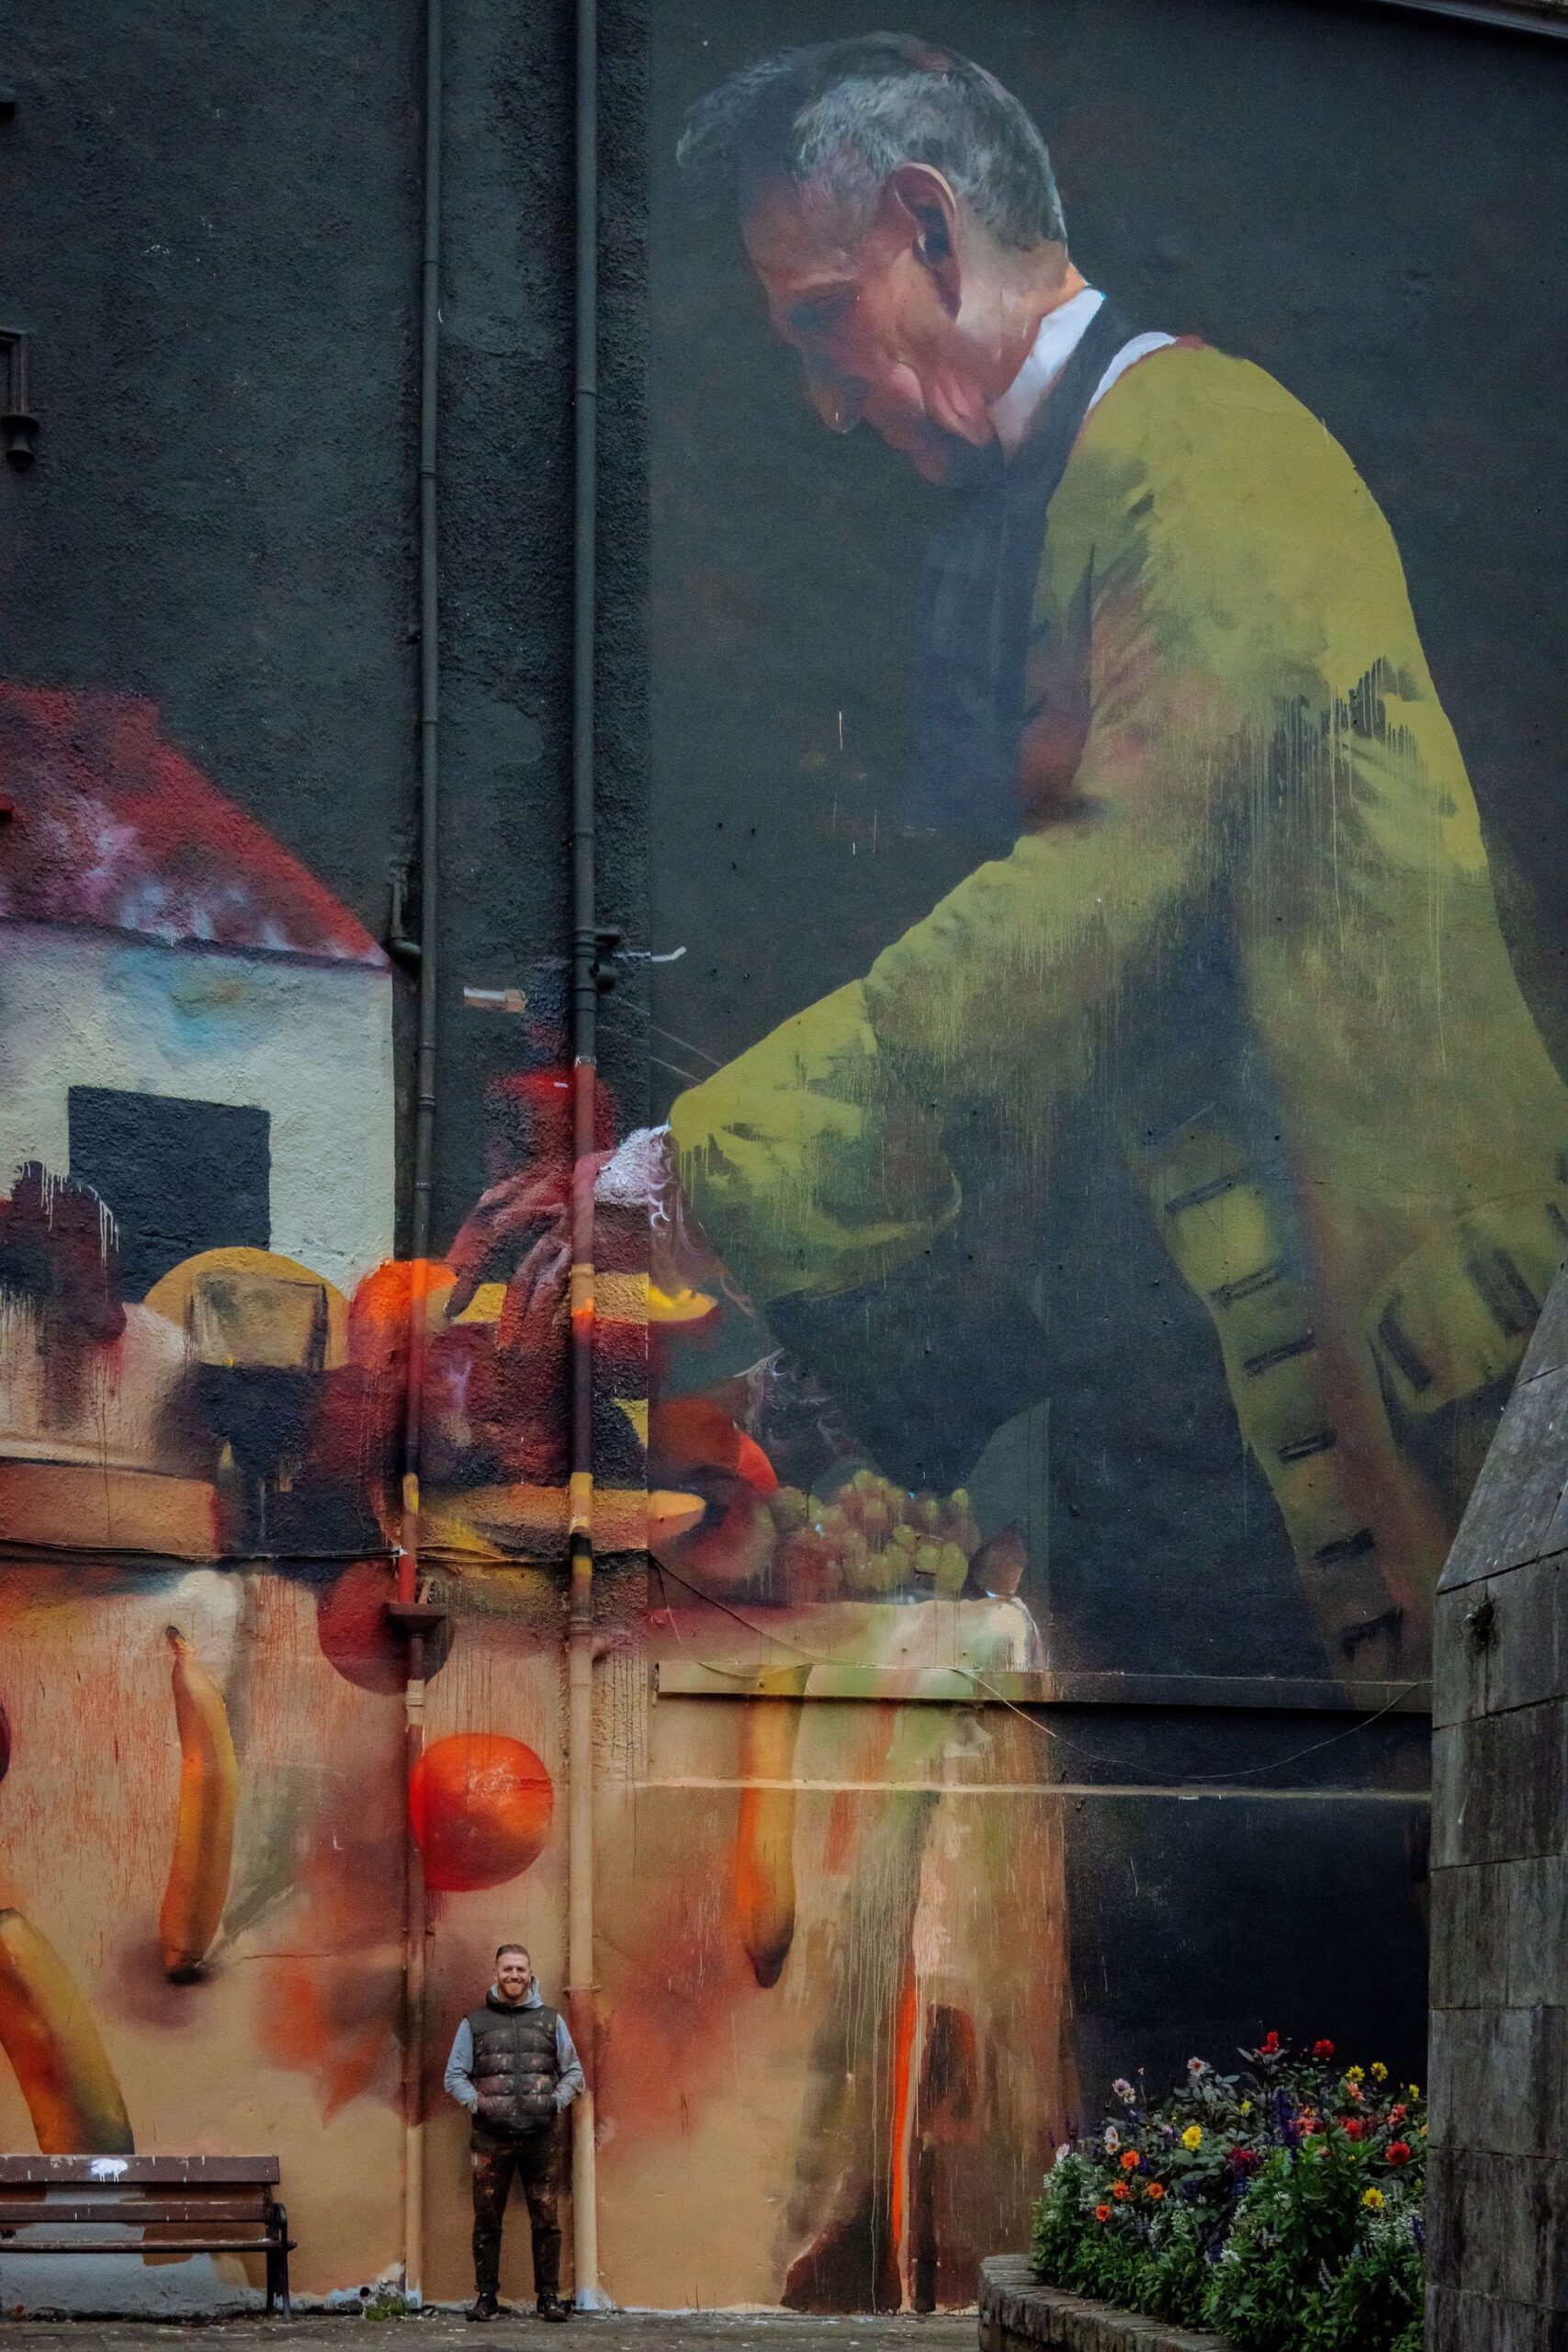 New mural by Conor Harrington in Cork, Ireland – StreetArtNews